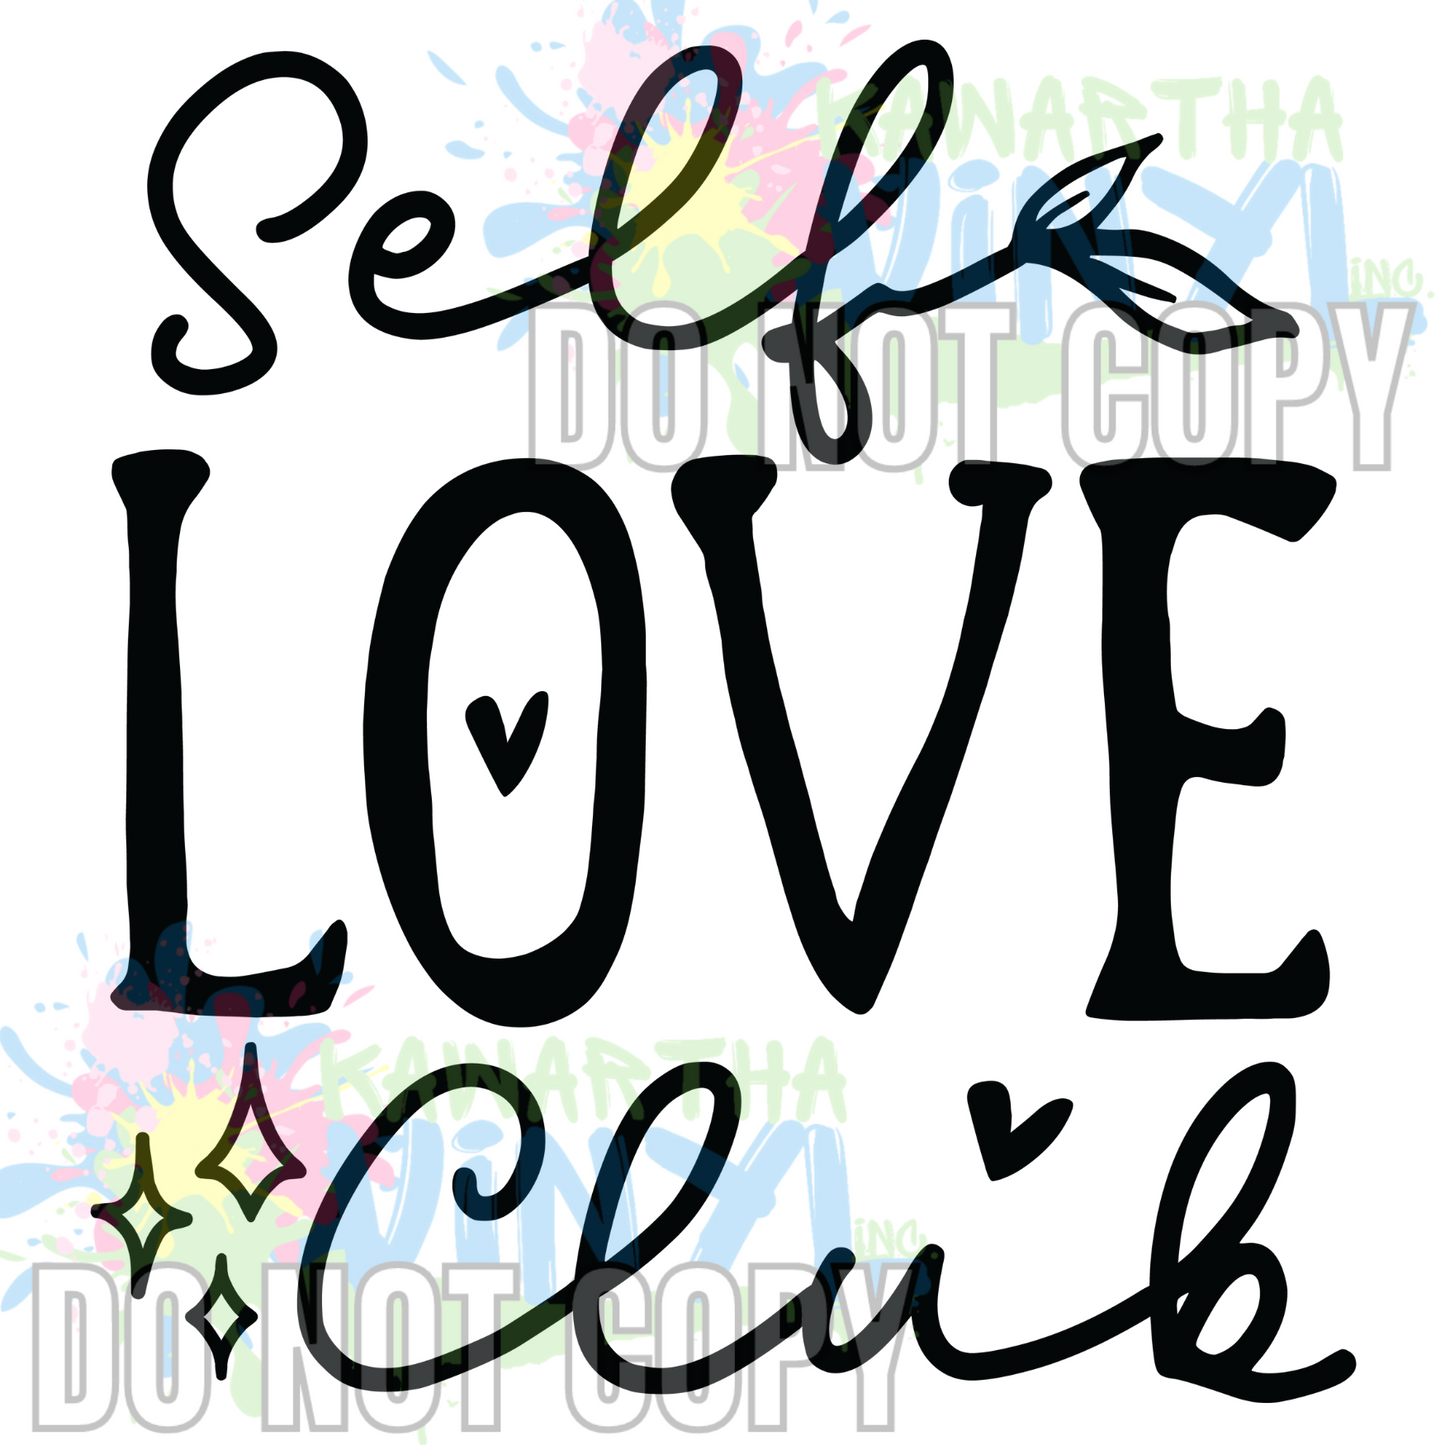 Self Love Club 2 BW Sublimation Print